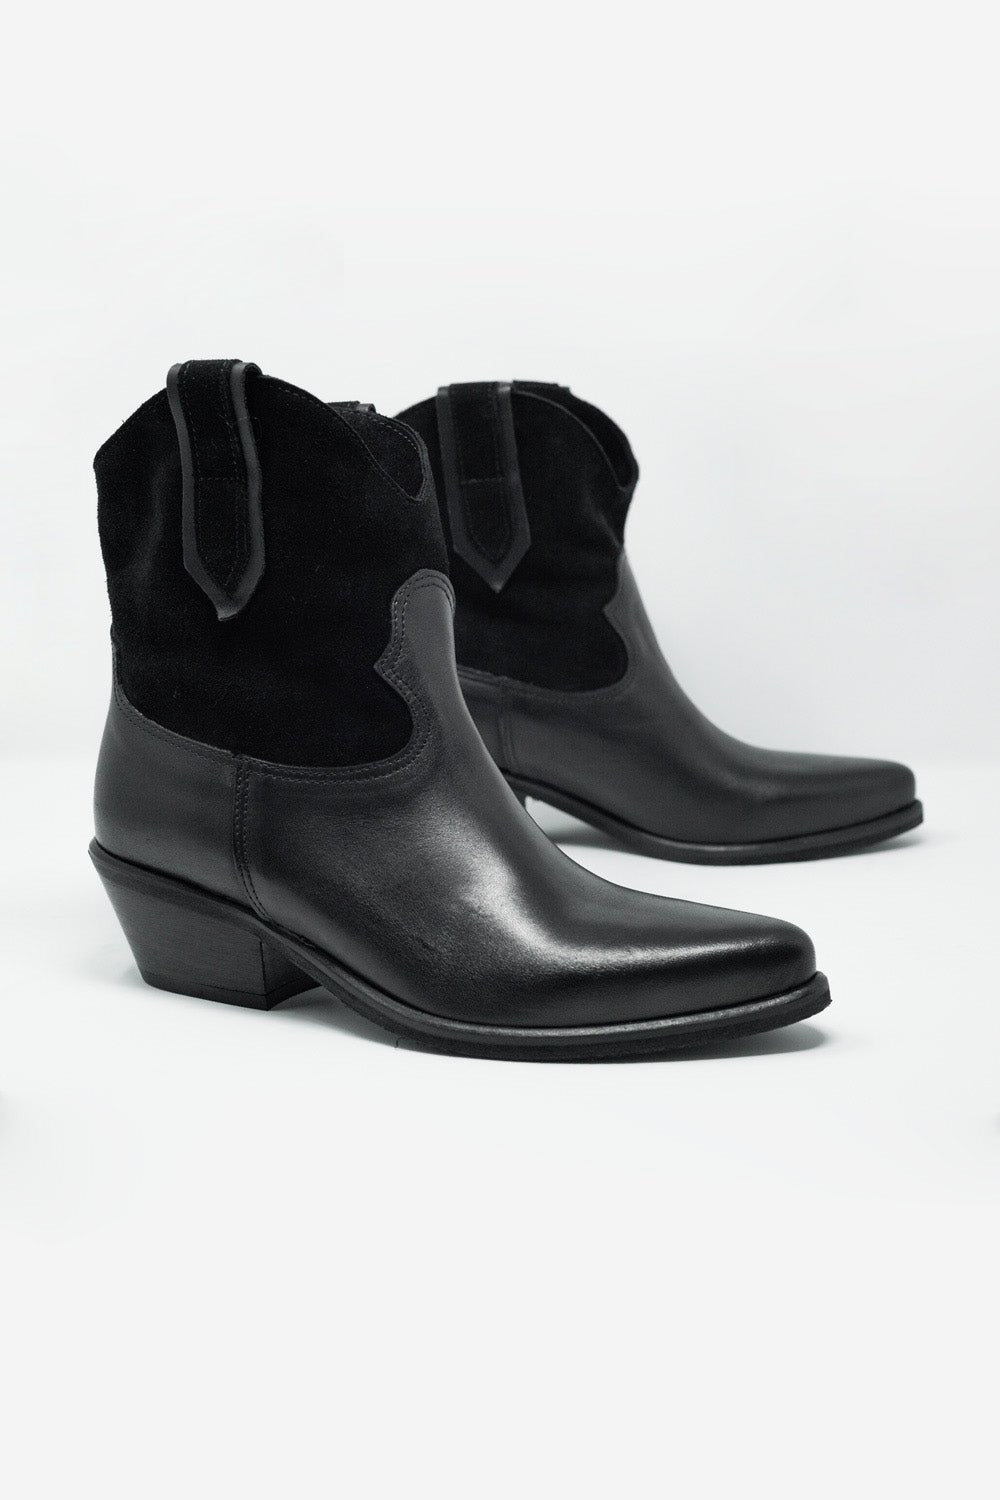 Black Western Sock Boots With Suede Detail - Mack & Harvie